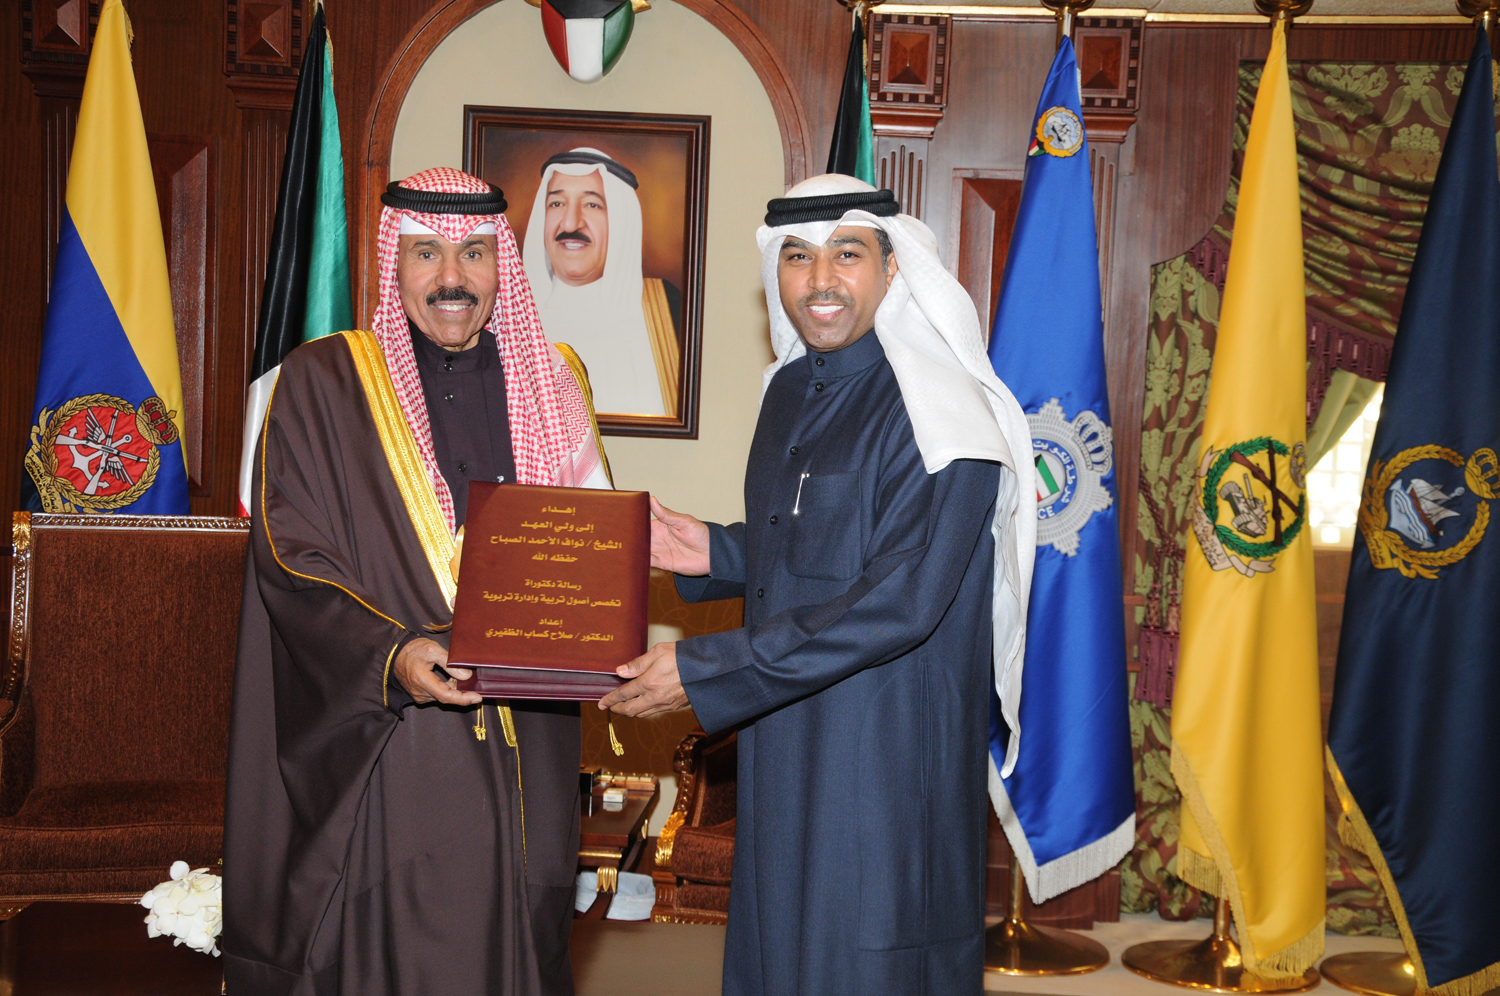 His Highness the Crown Prince Sheikh Nawaf Al-Ahmad Al-Jaber Al-Sabah receives Dr. Salah Kassab Al-Thufairi